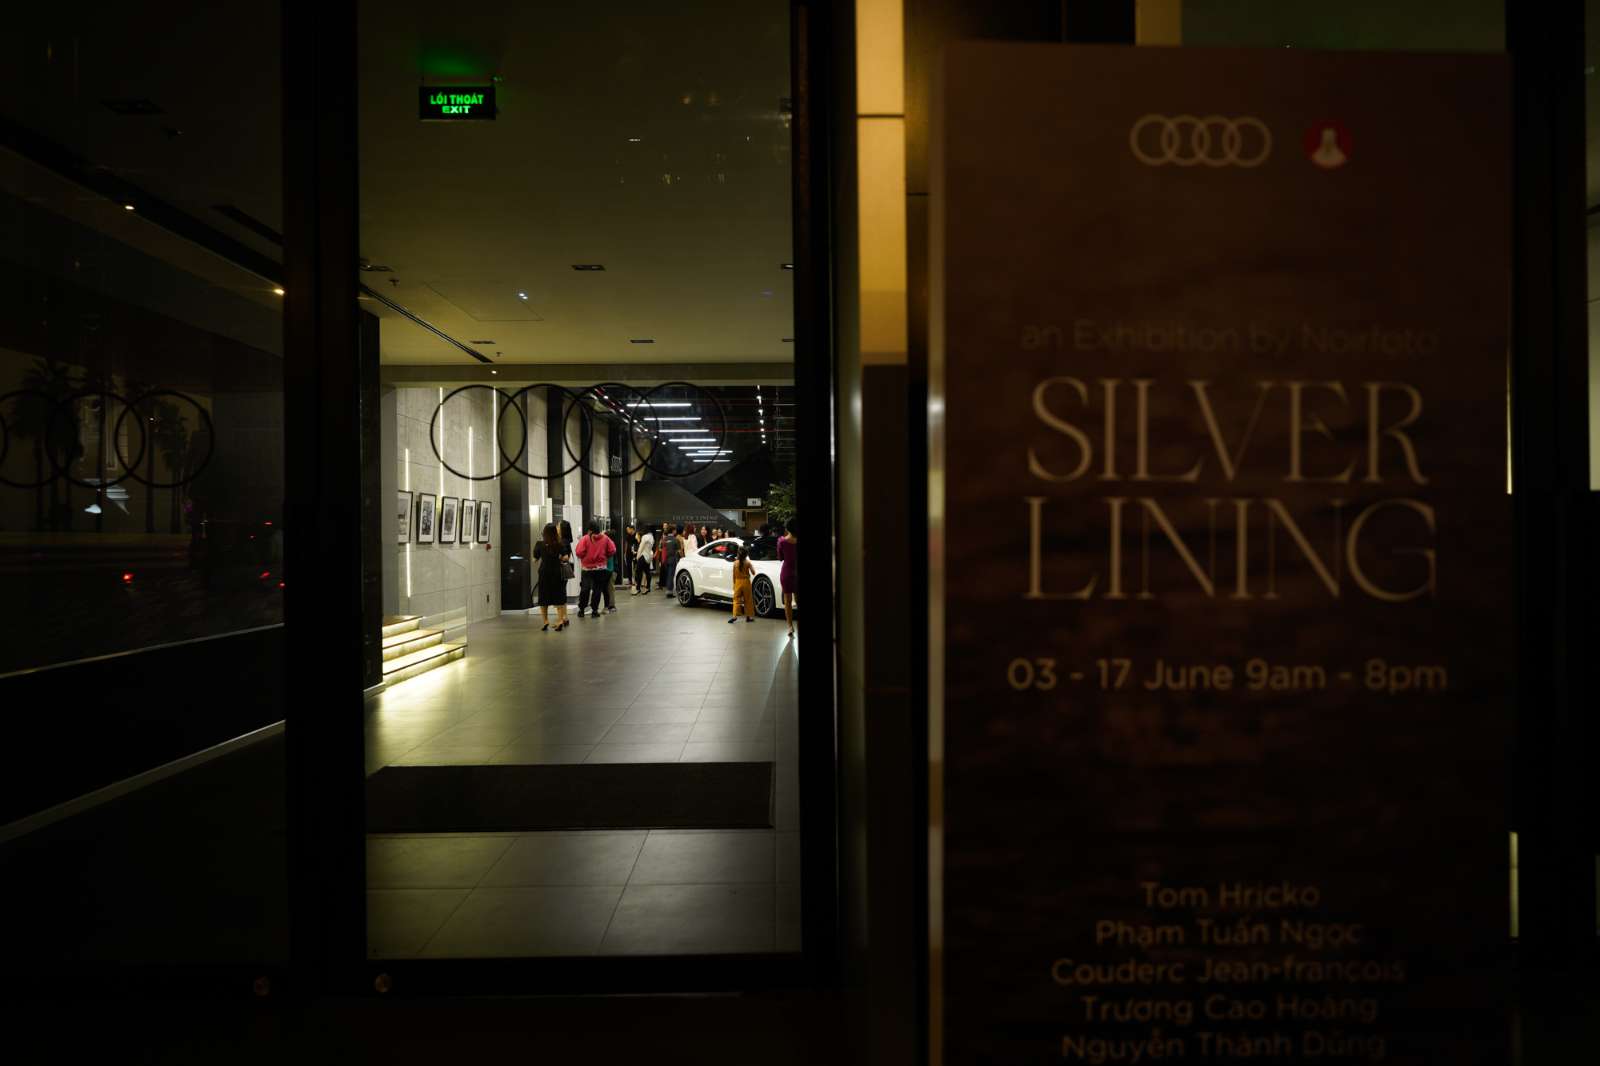 Audi Charging Lounge, Audi Vietnam, Silver Lining, The Grapevine Selection, triển lãm ảnh